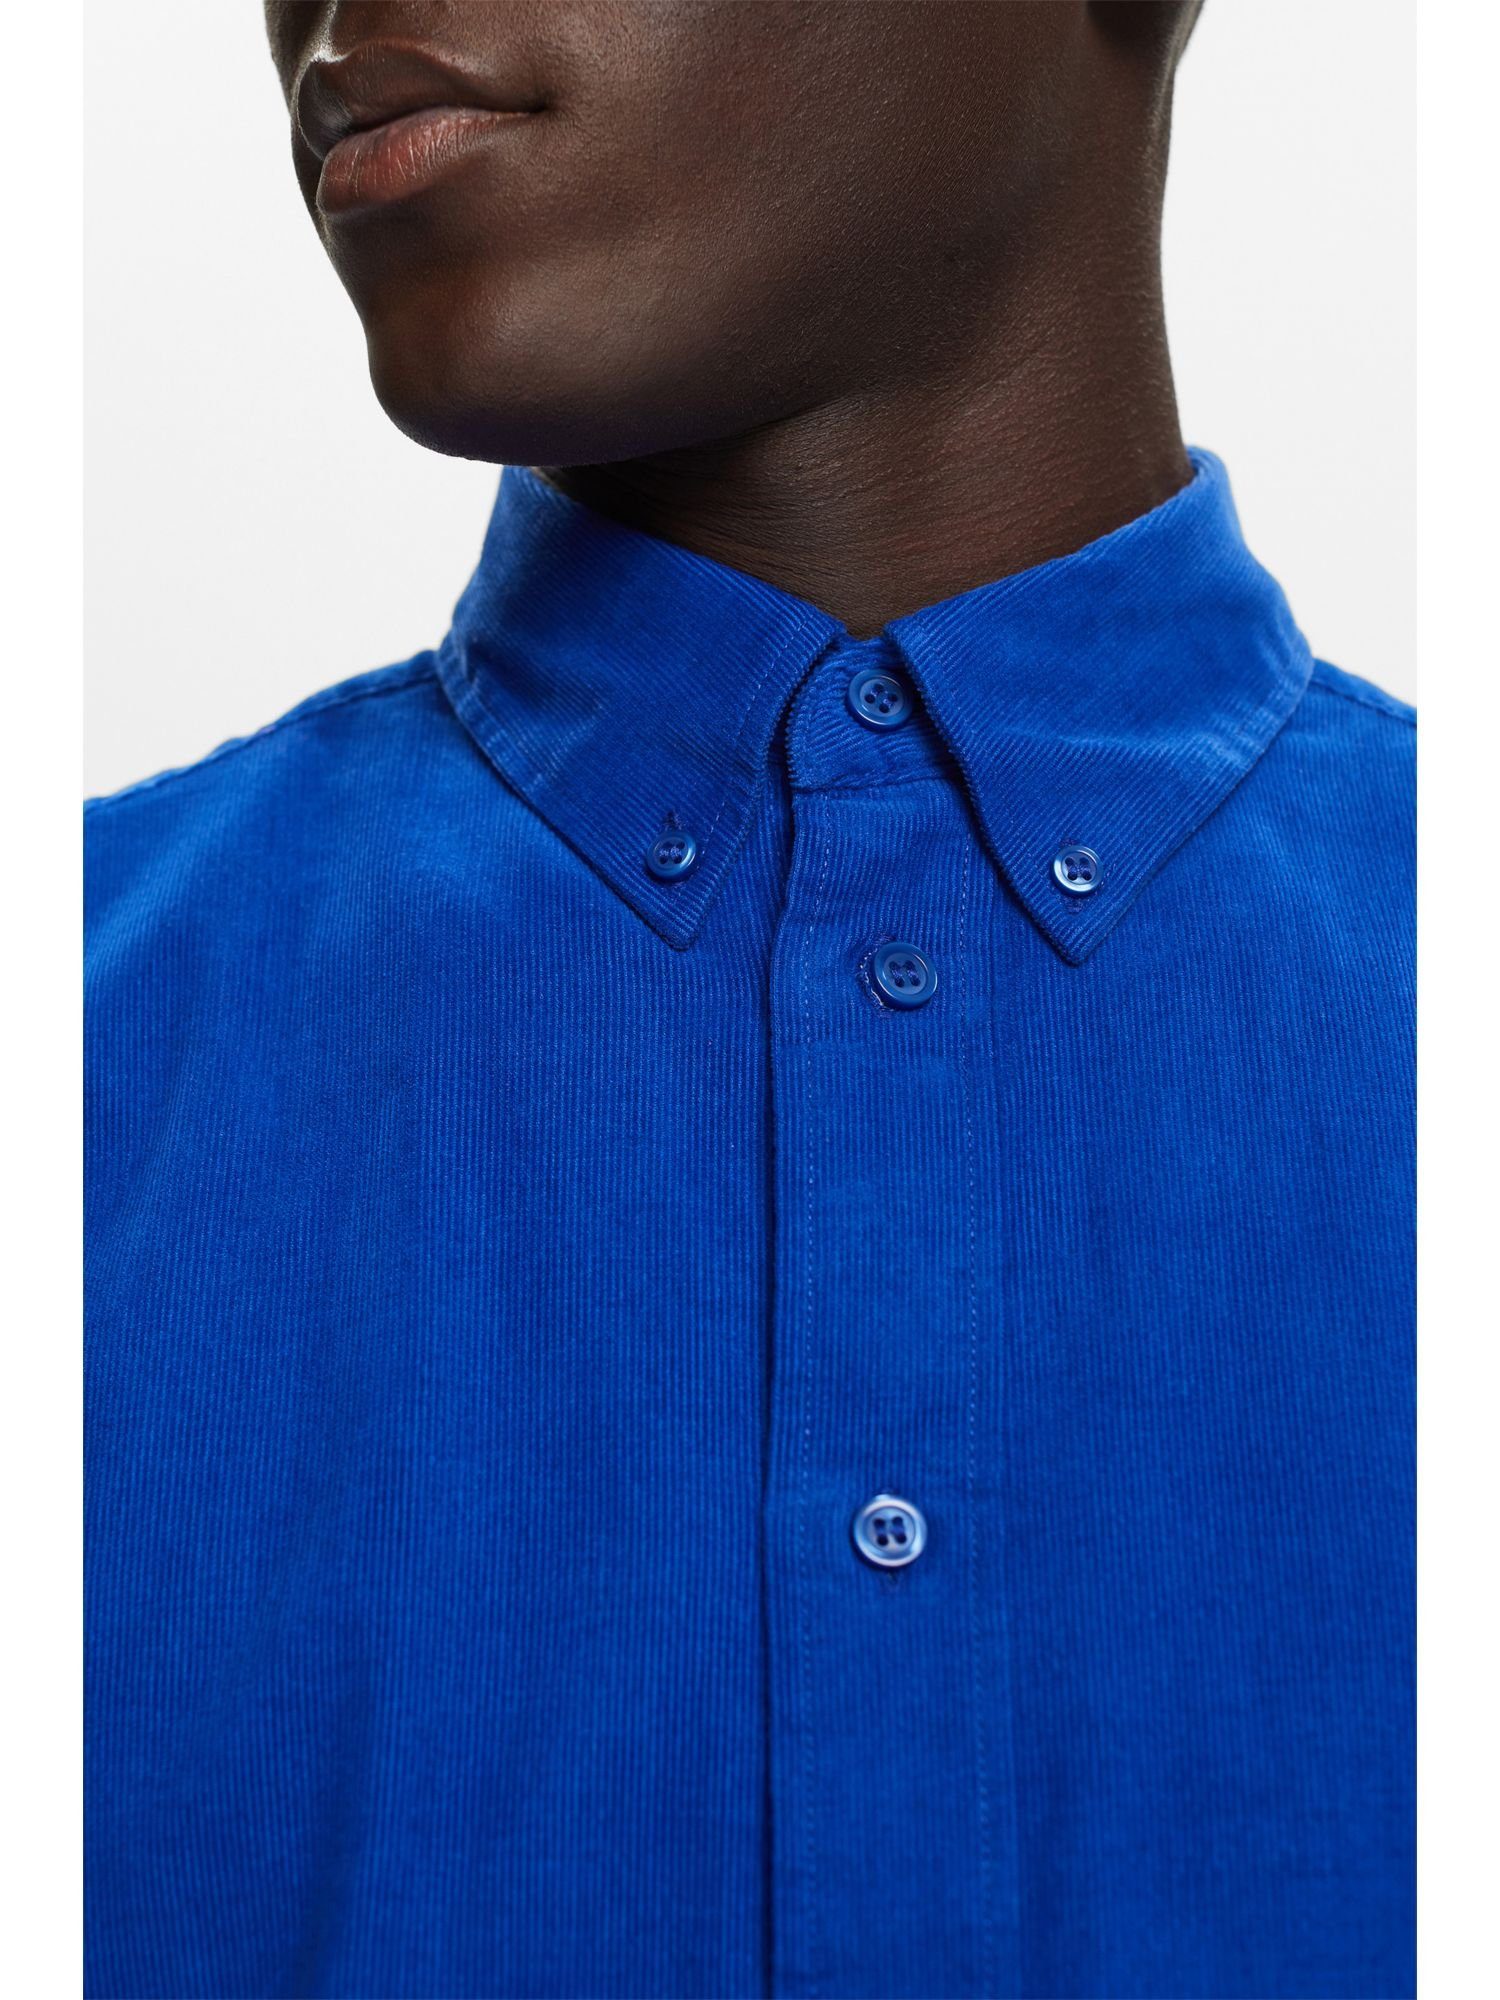 Esprit Langarmhemd BLUE aus Baumwolle Hemd Cord, BRIGHT 100